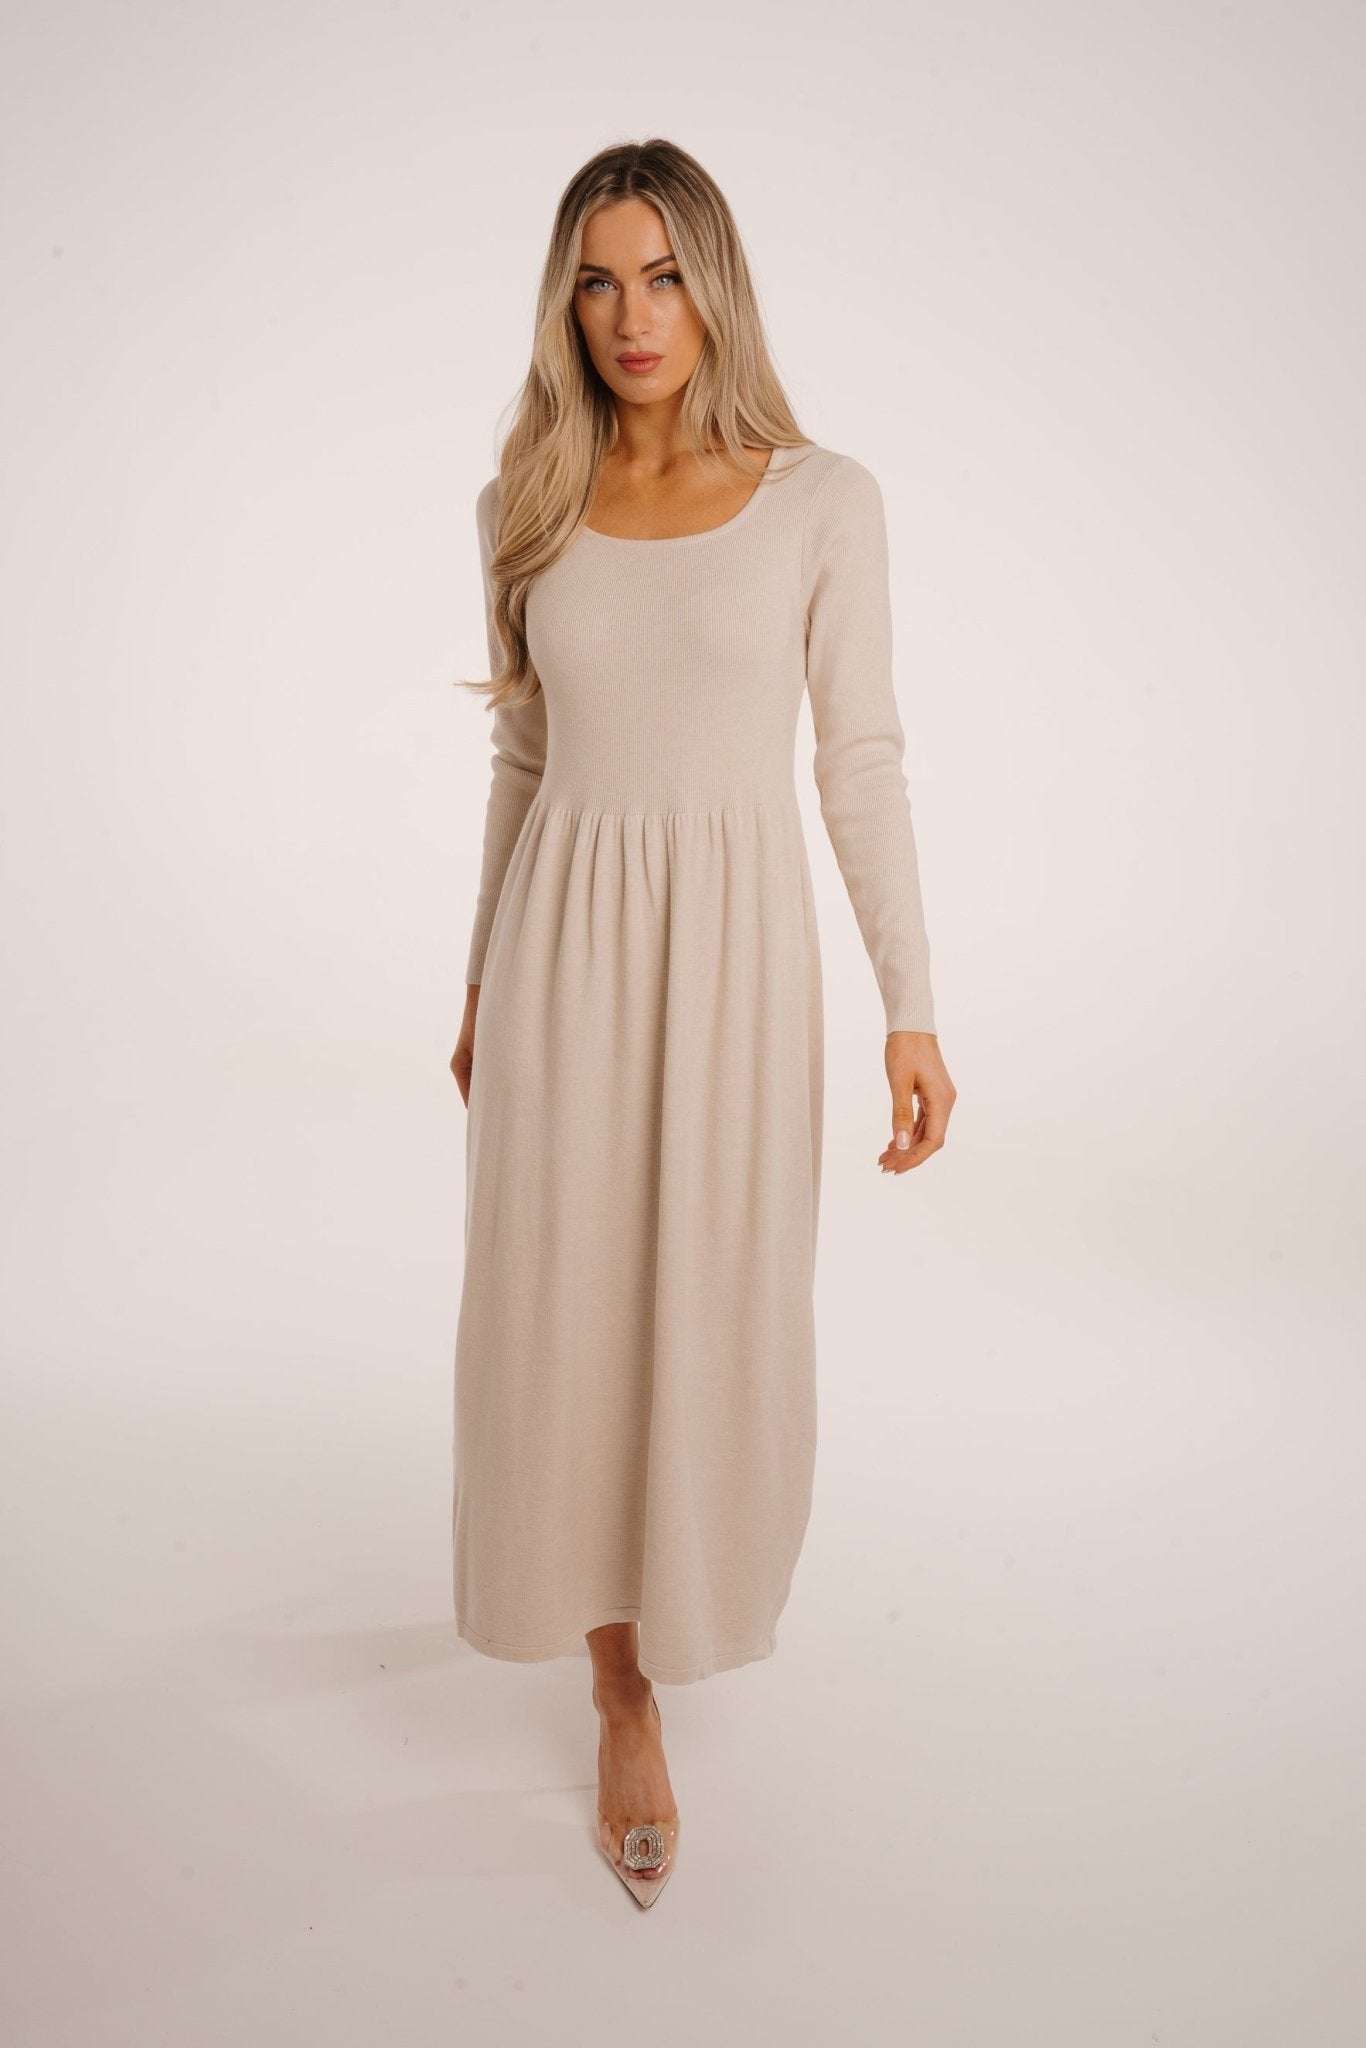 Holly Knit Maxi Dress In Neutral - The Walk in Wardrobe